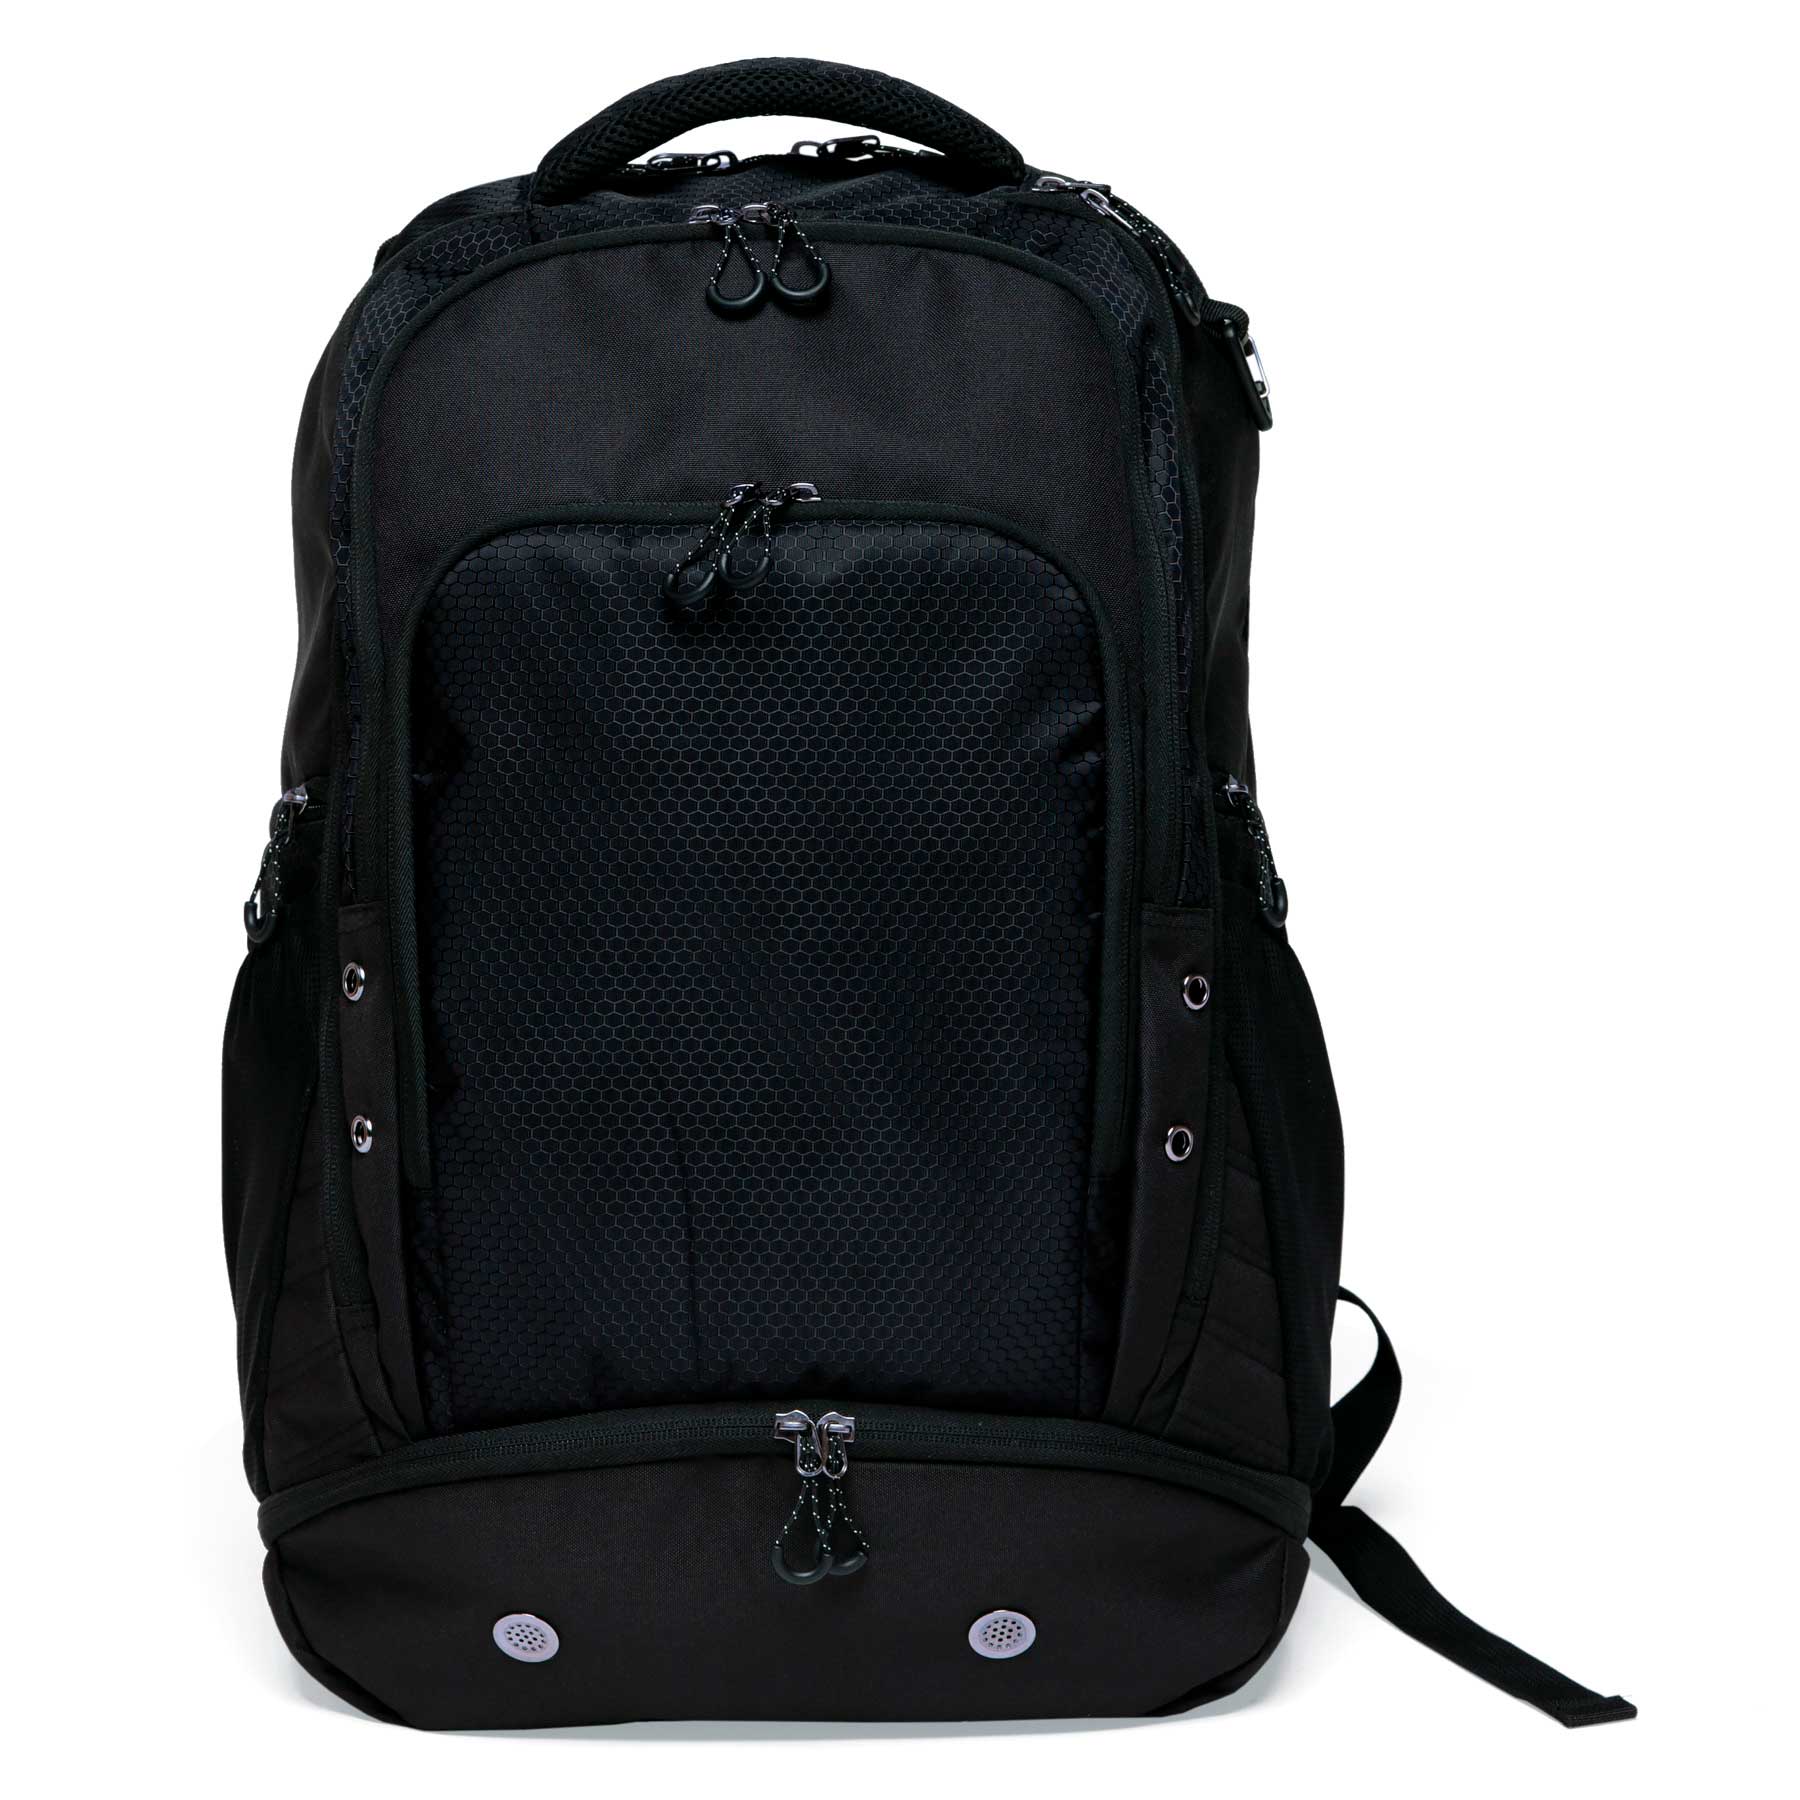 bglb_grid-lock-backpack-black_black-front-2.jpg